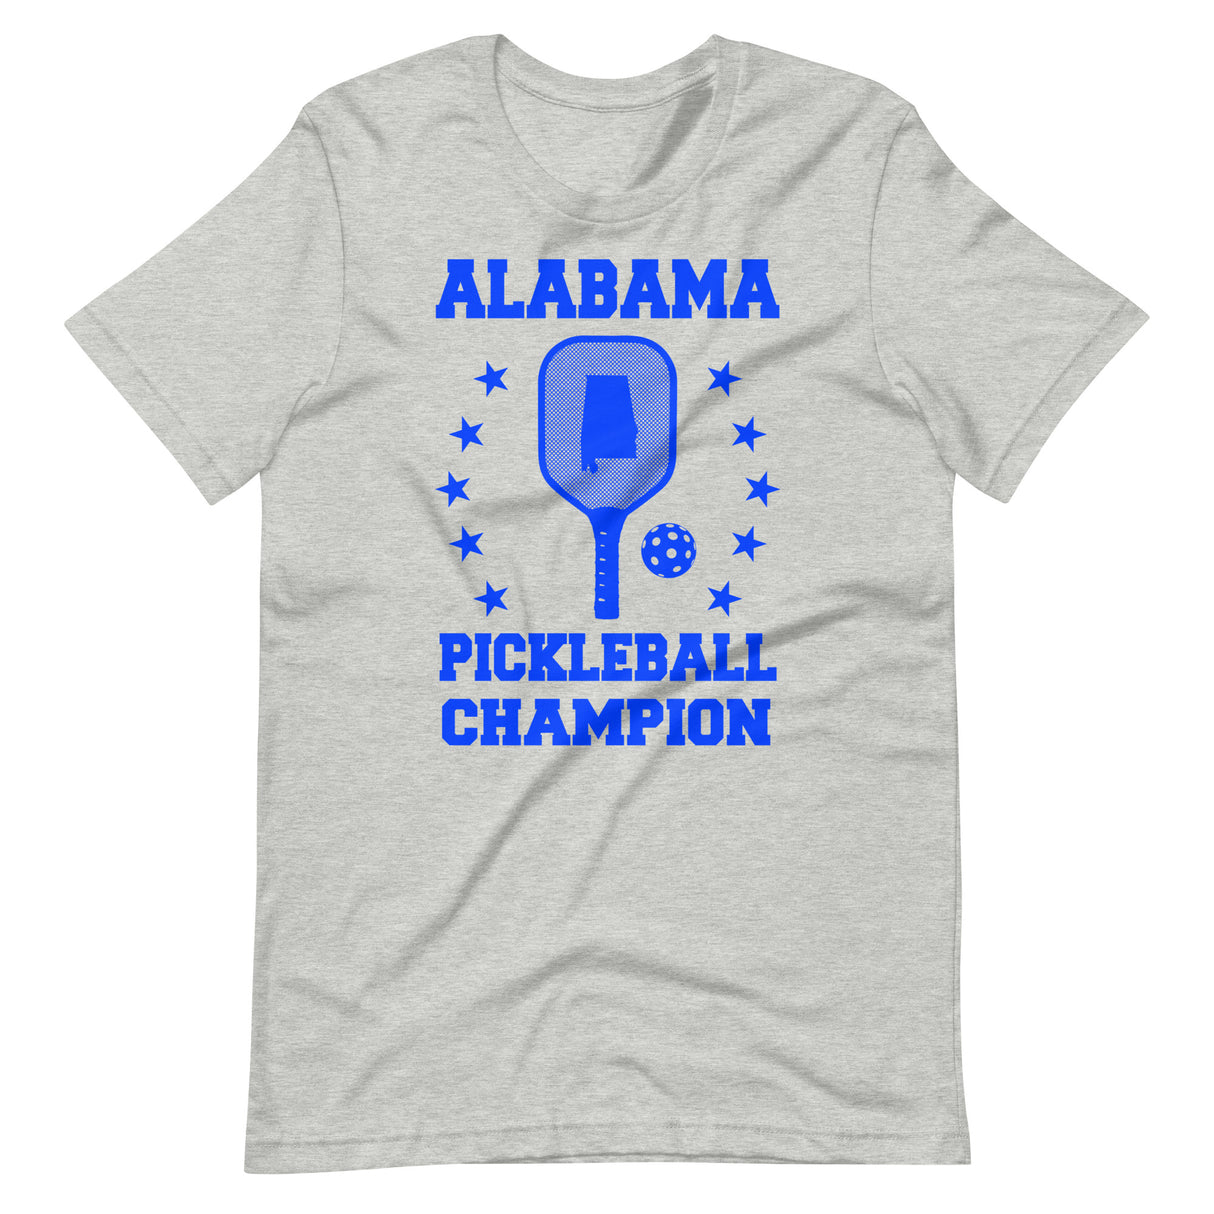 Alabama Pickleball Champion Shirt